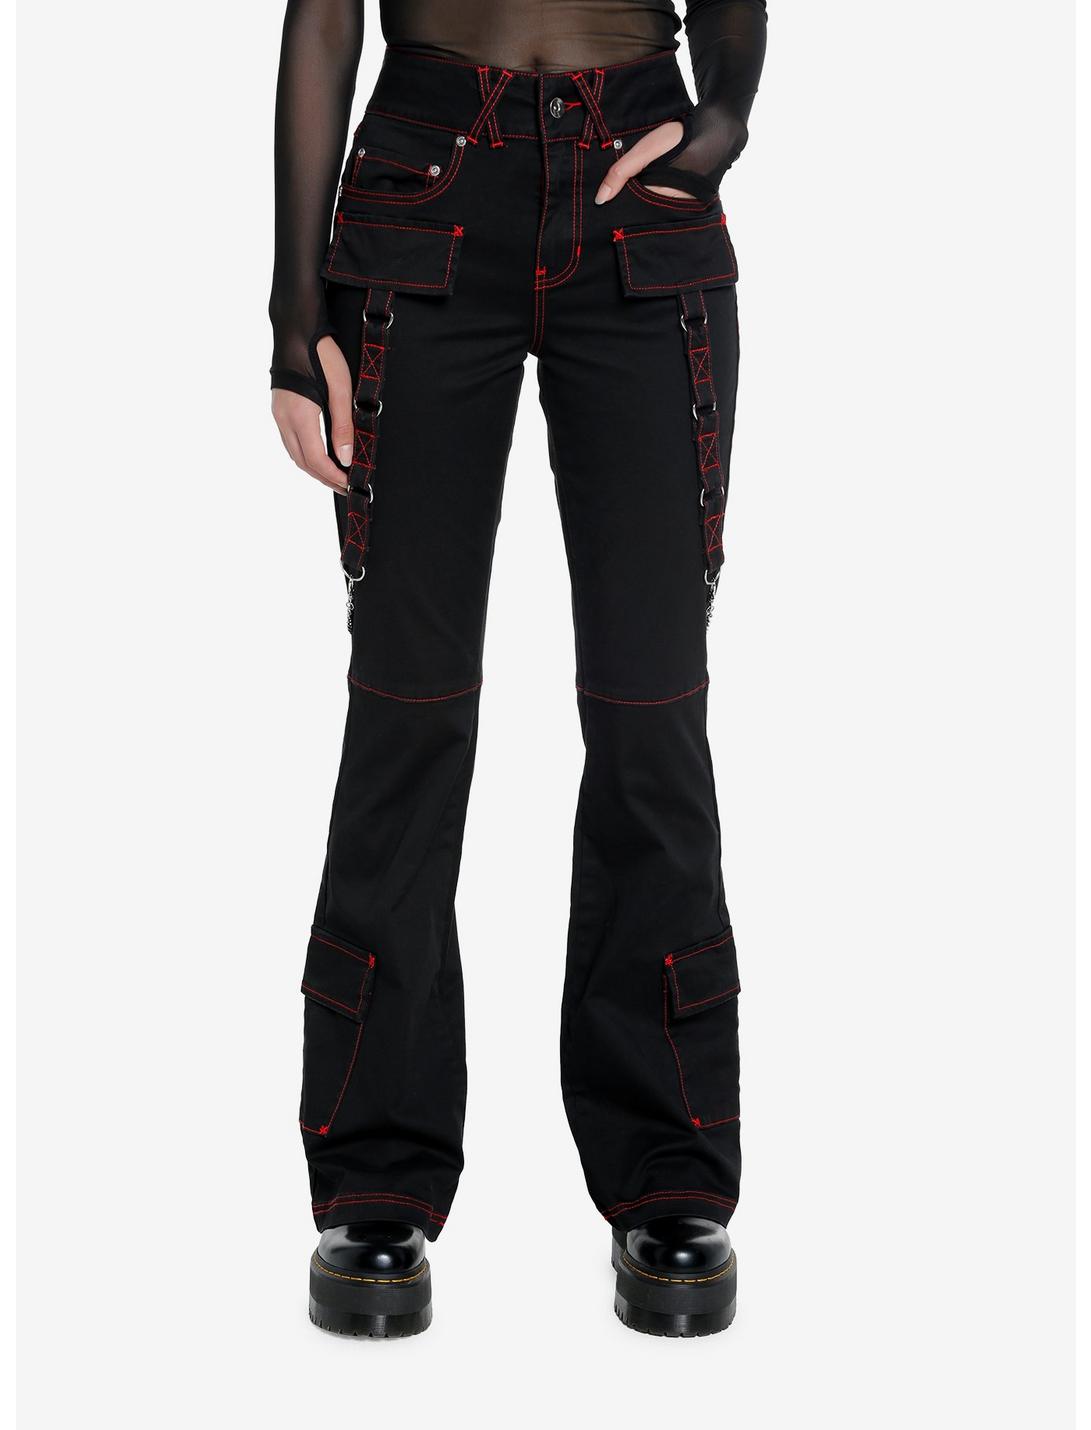 Social Collision Black & Red Contrast Stitch Strap Flare Pants, BLACK, hi-res